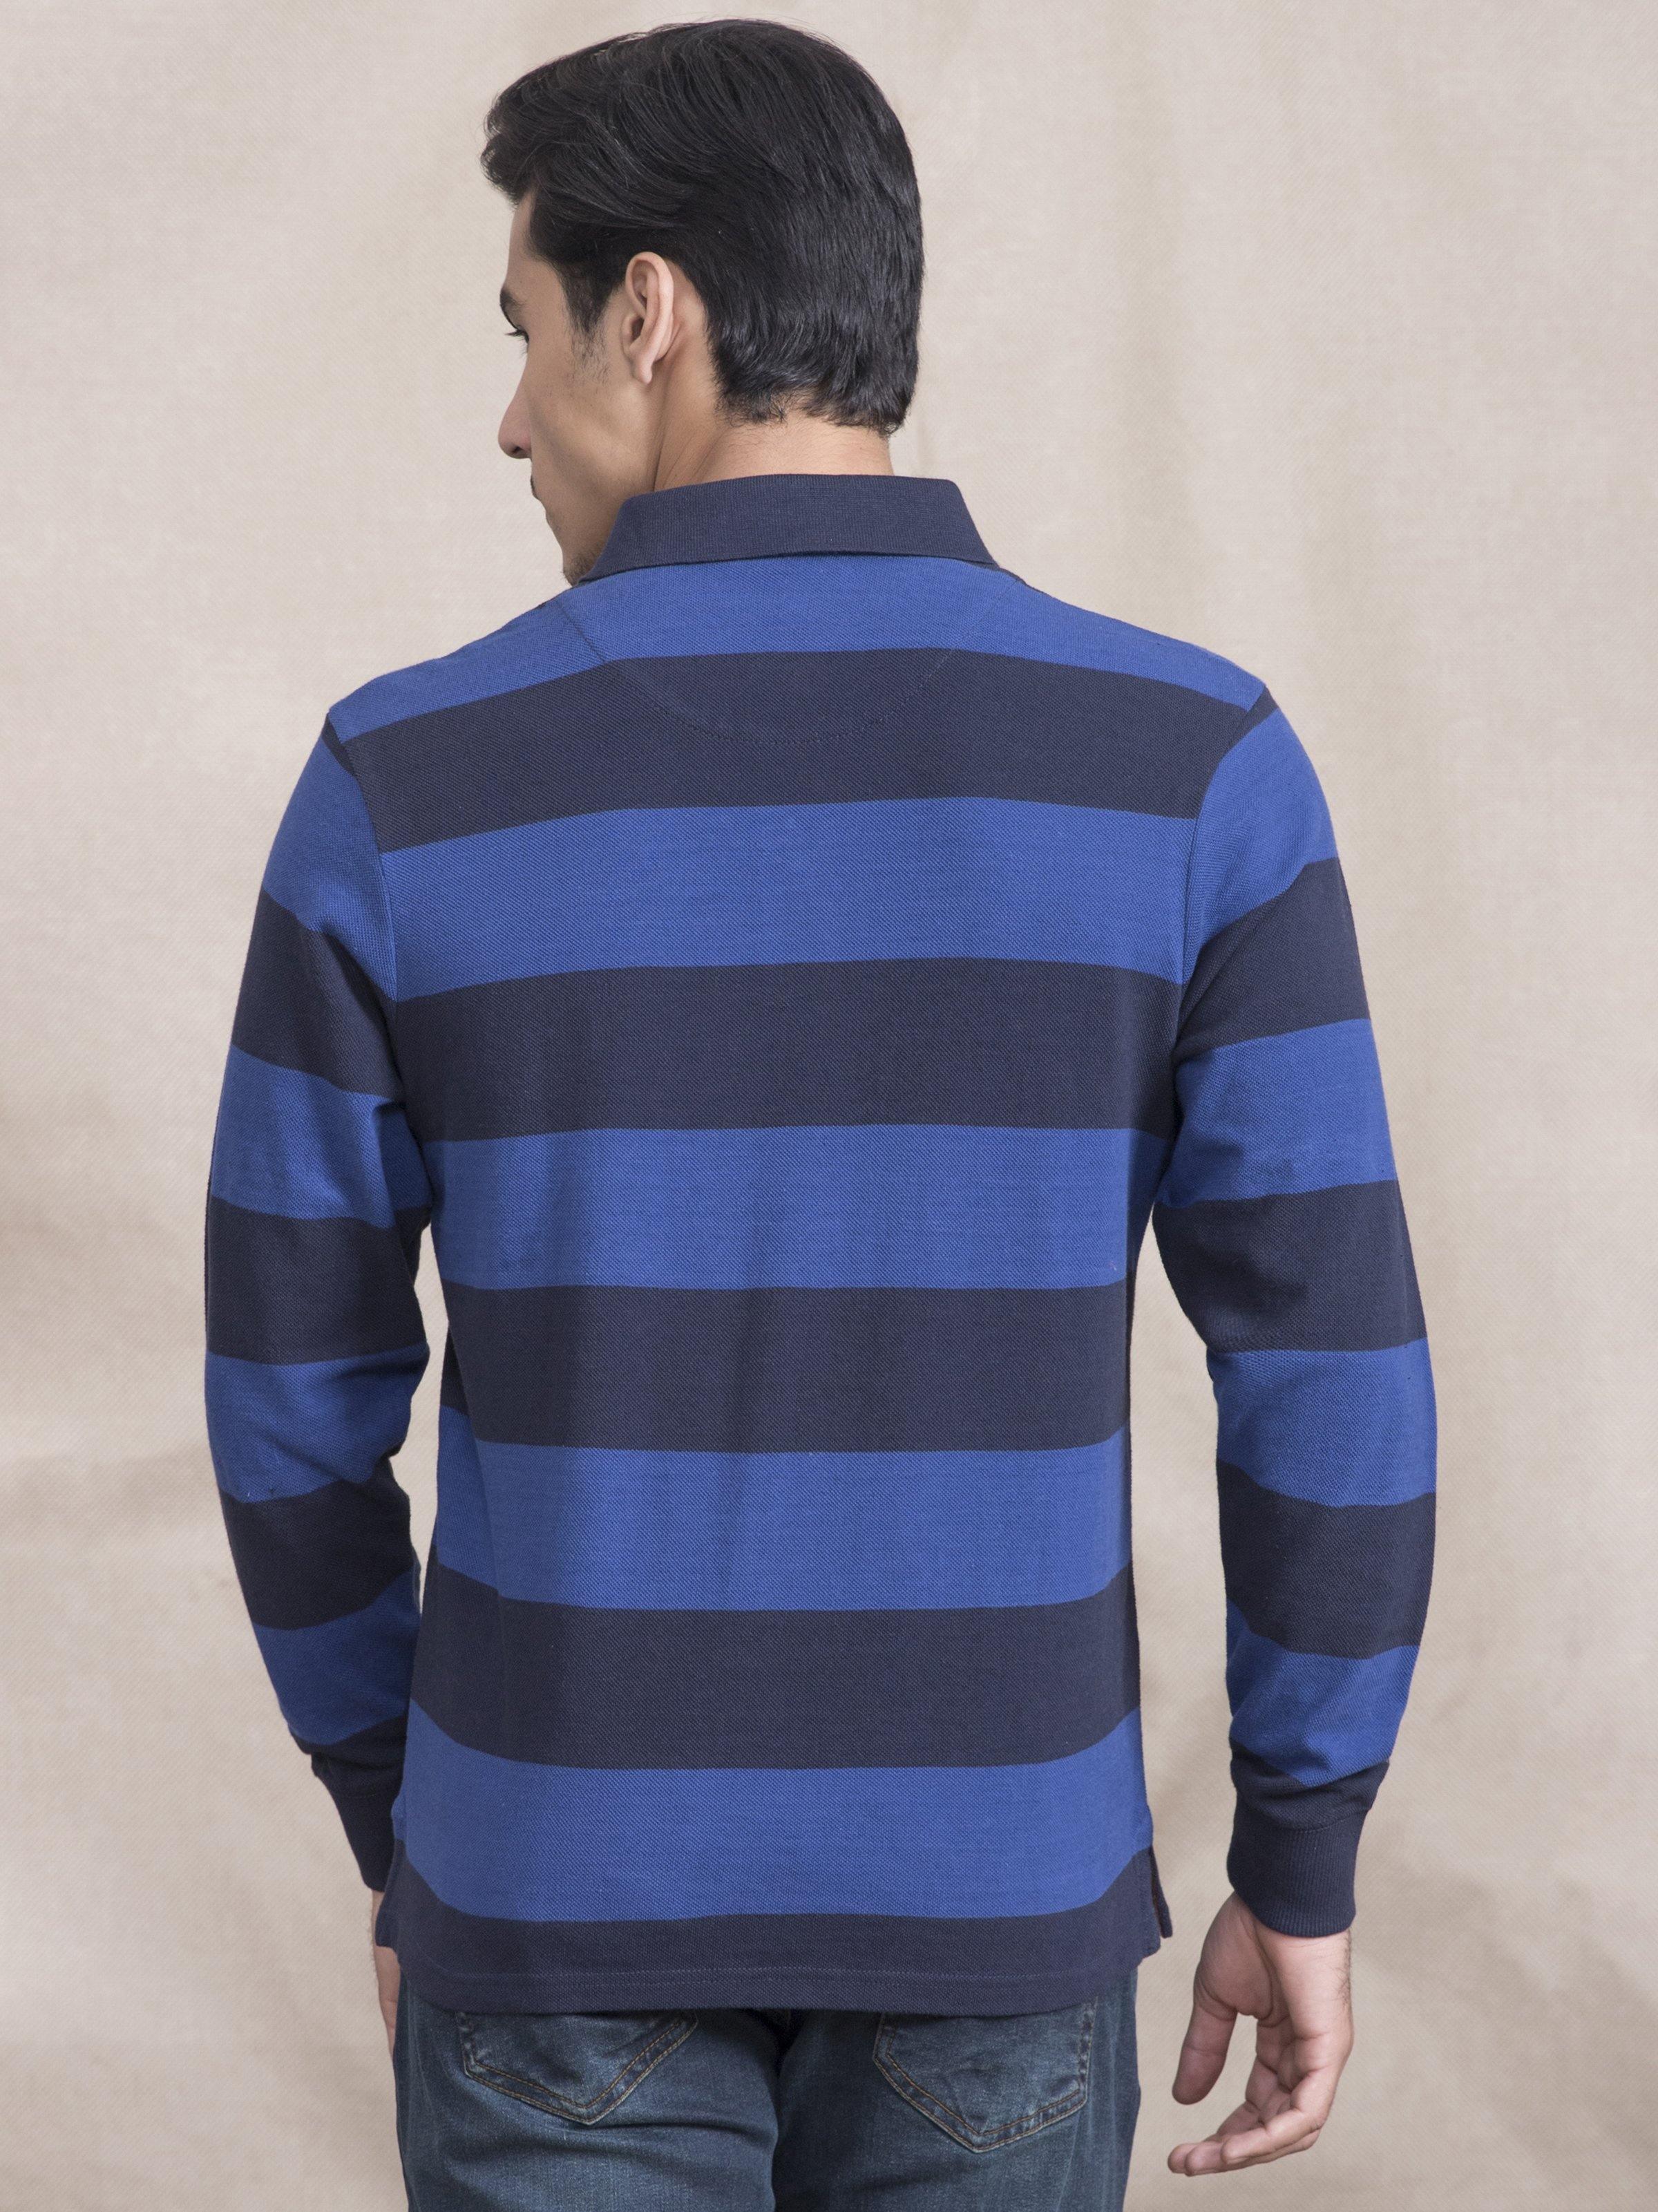 POLO SHIRT YARN/D FULL SLEEVE NAVY BLUE at Charcoal Clothing